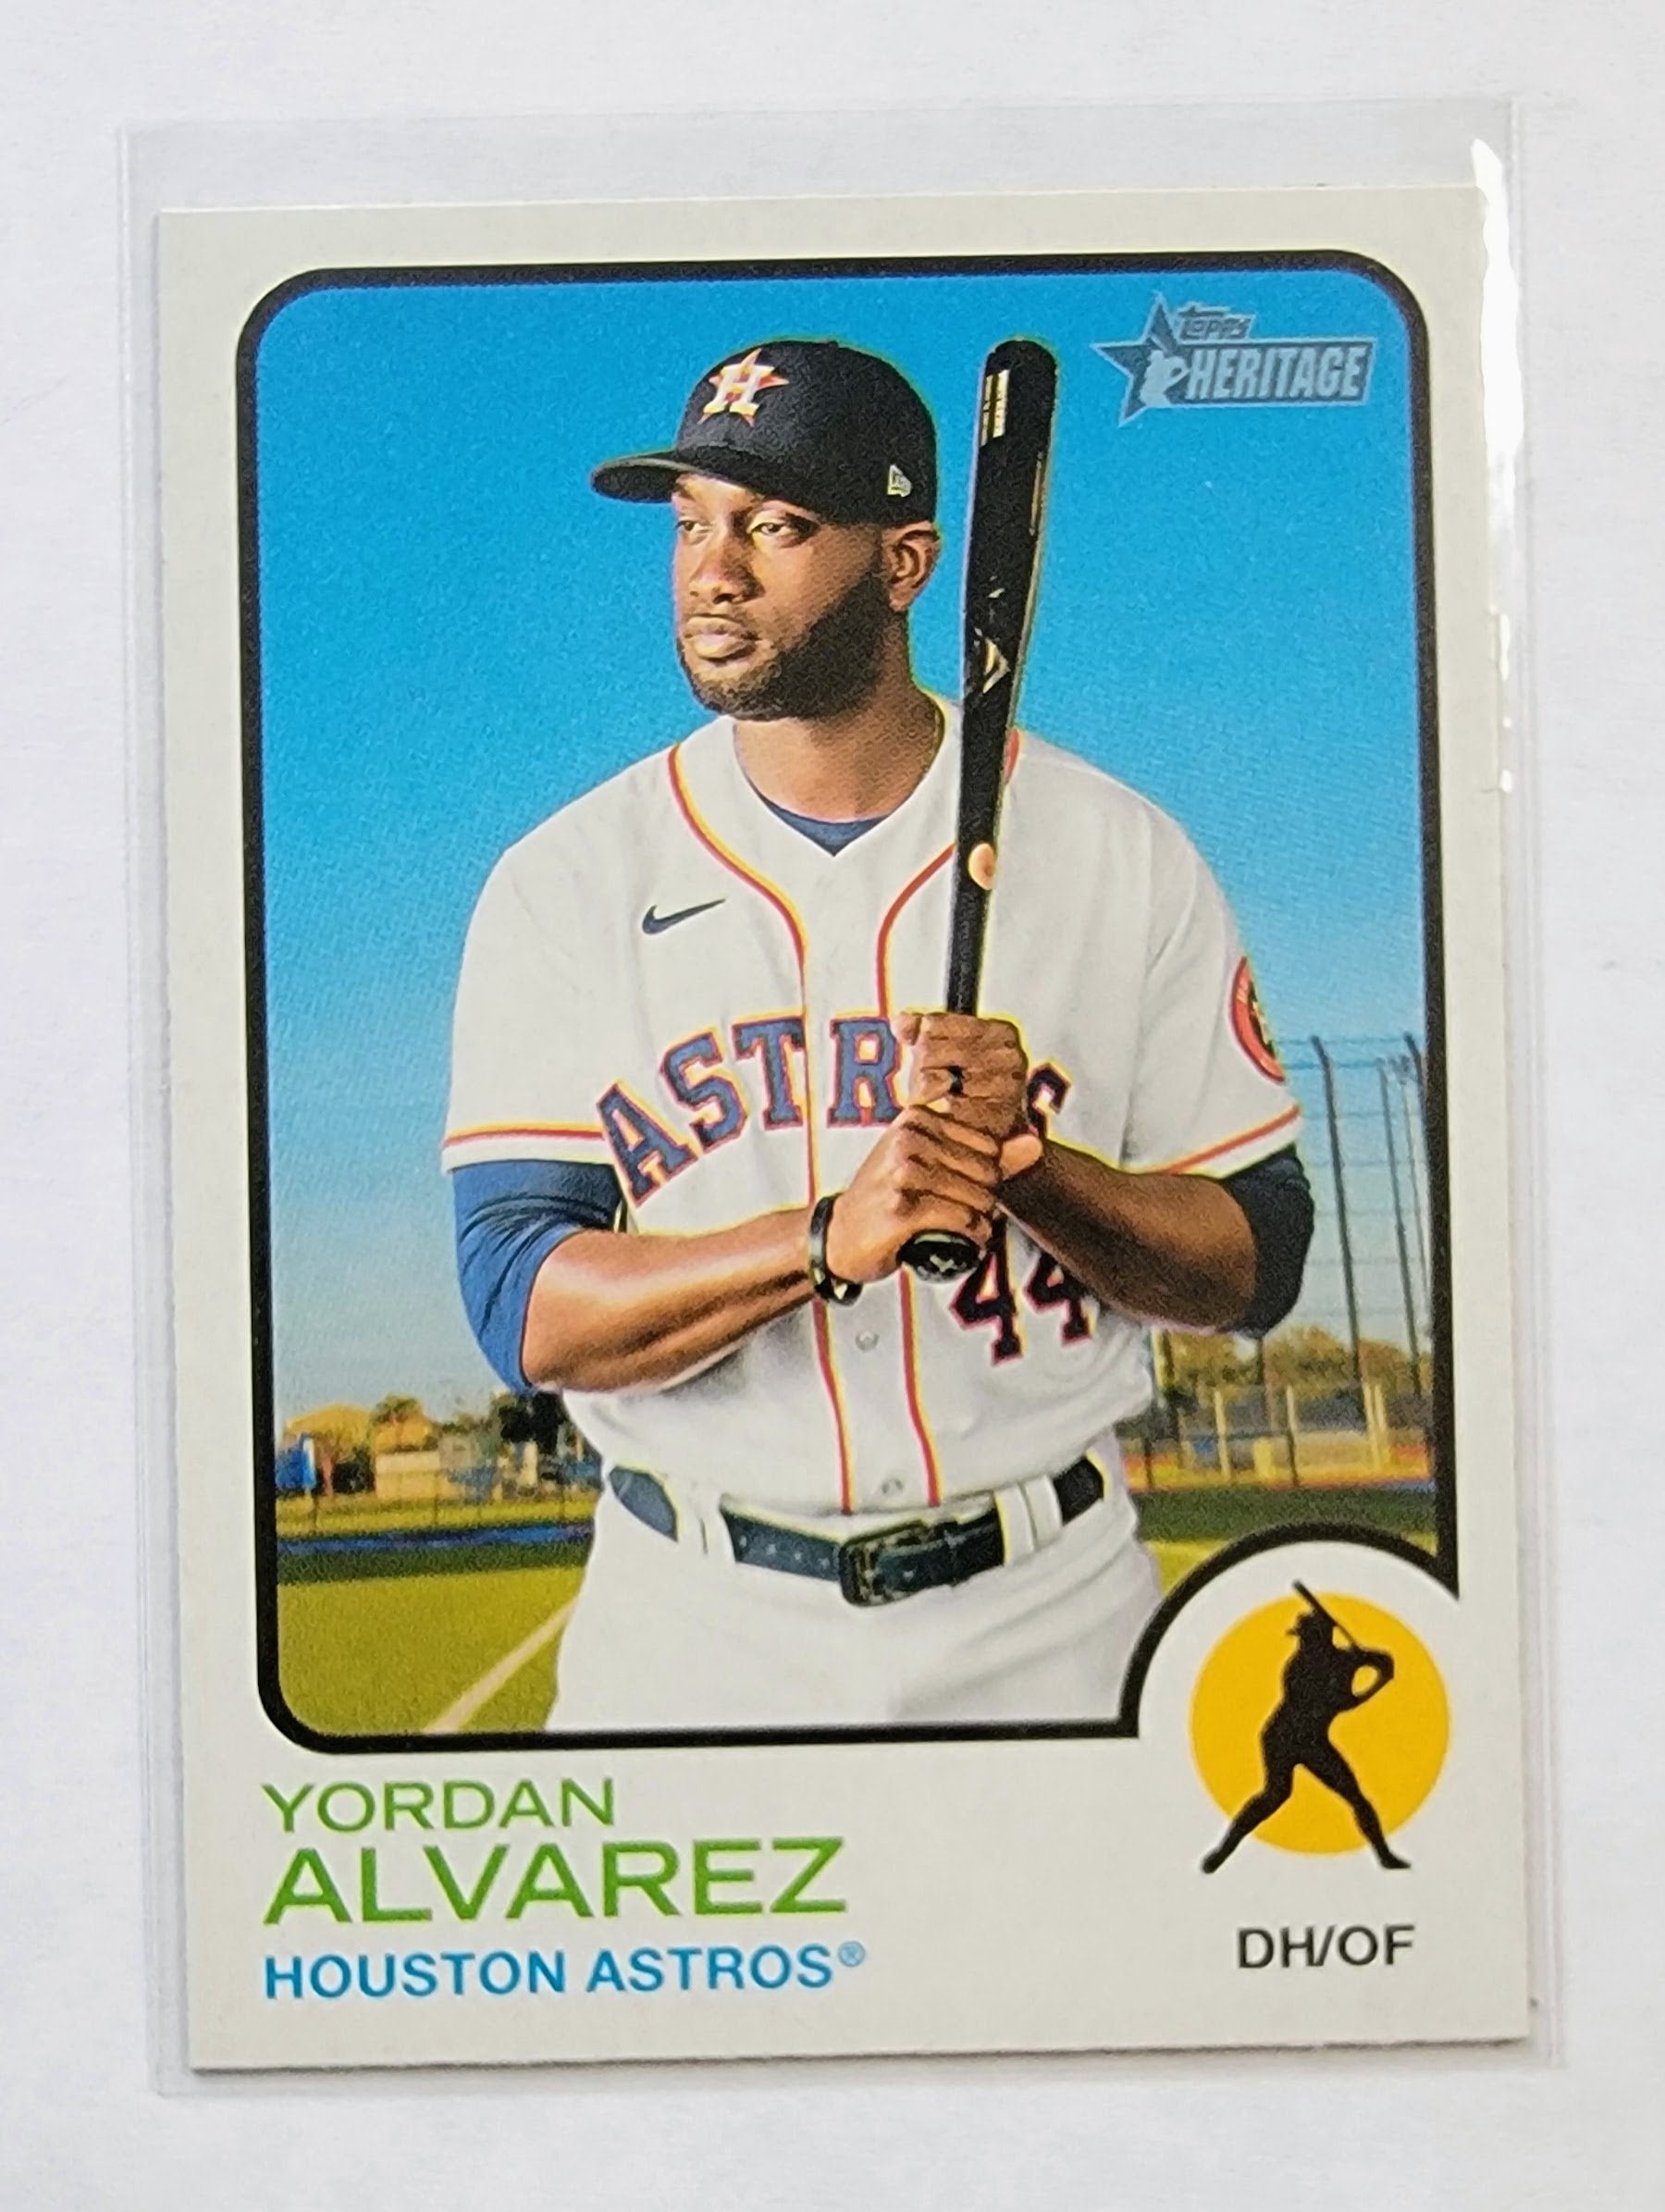 2022 Topps Heritage Yordan Alvarez Baseball Card AVM1 simple Xclusive Collectibles   